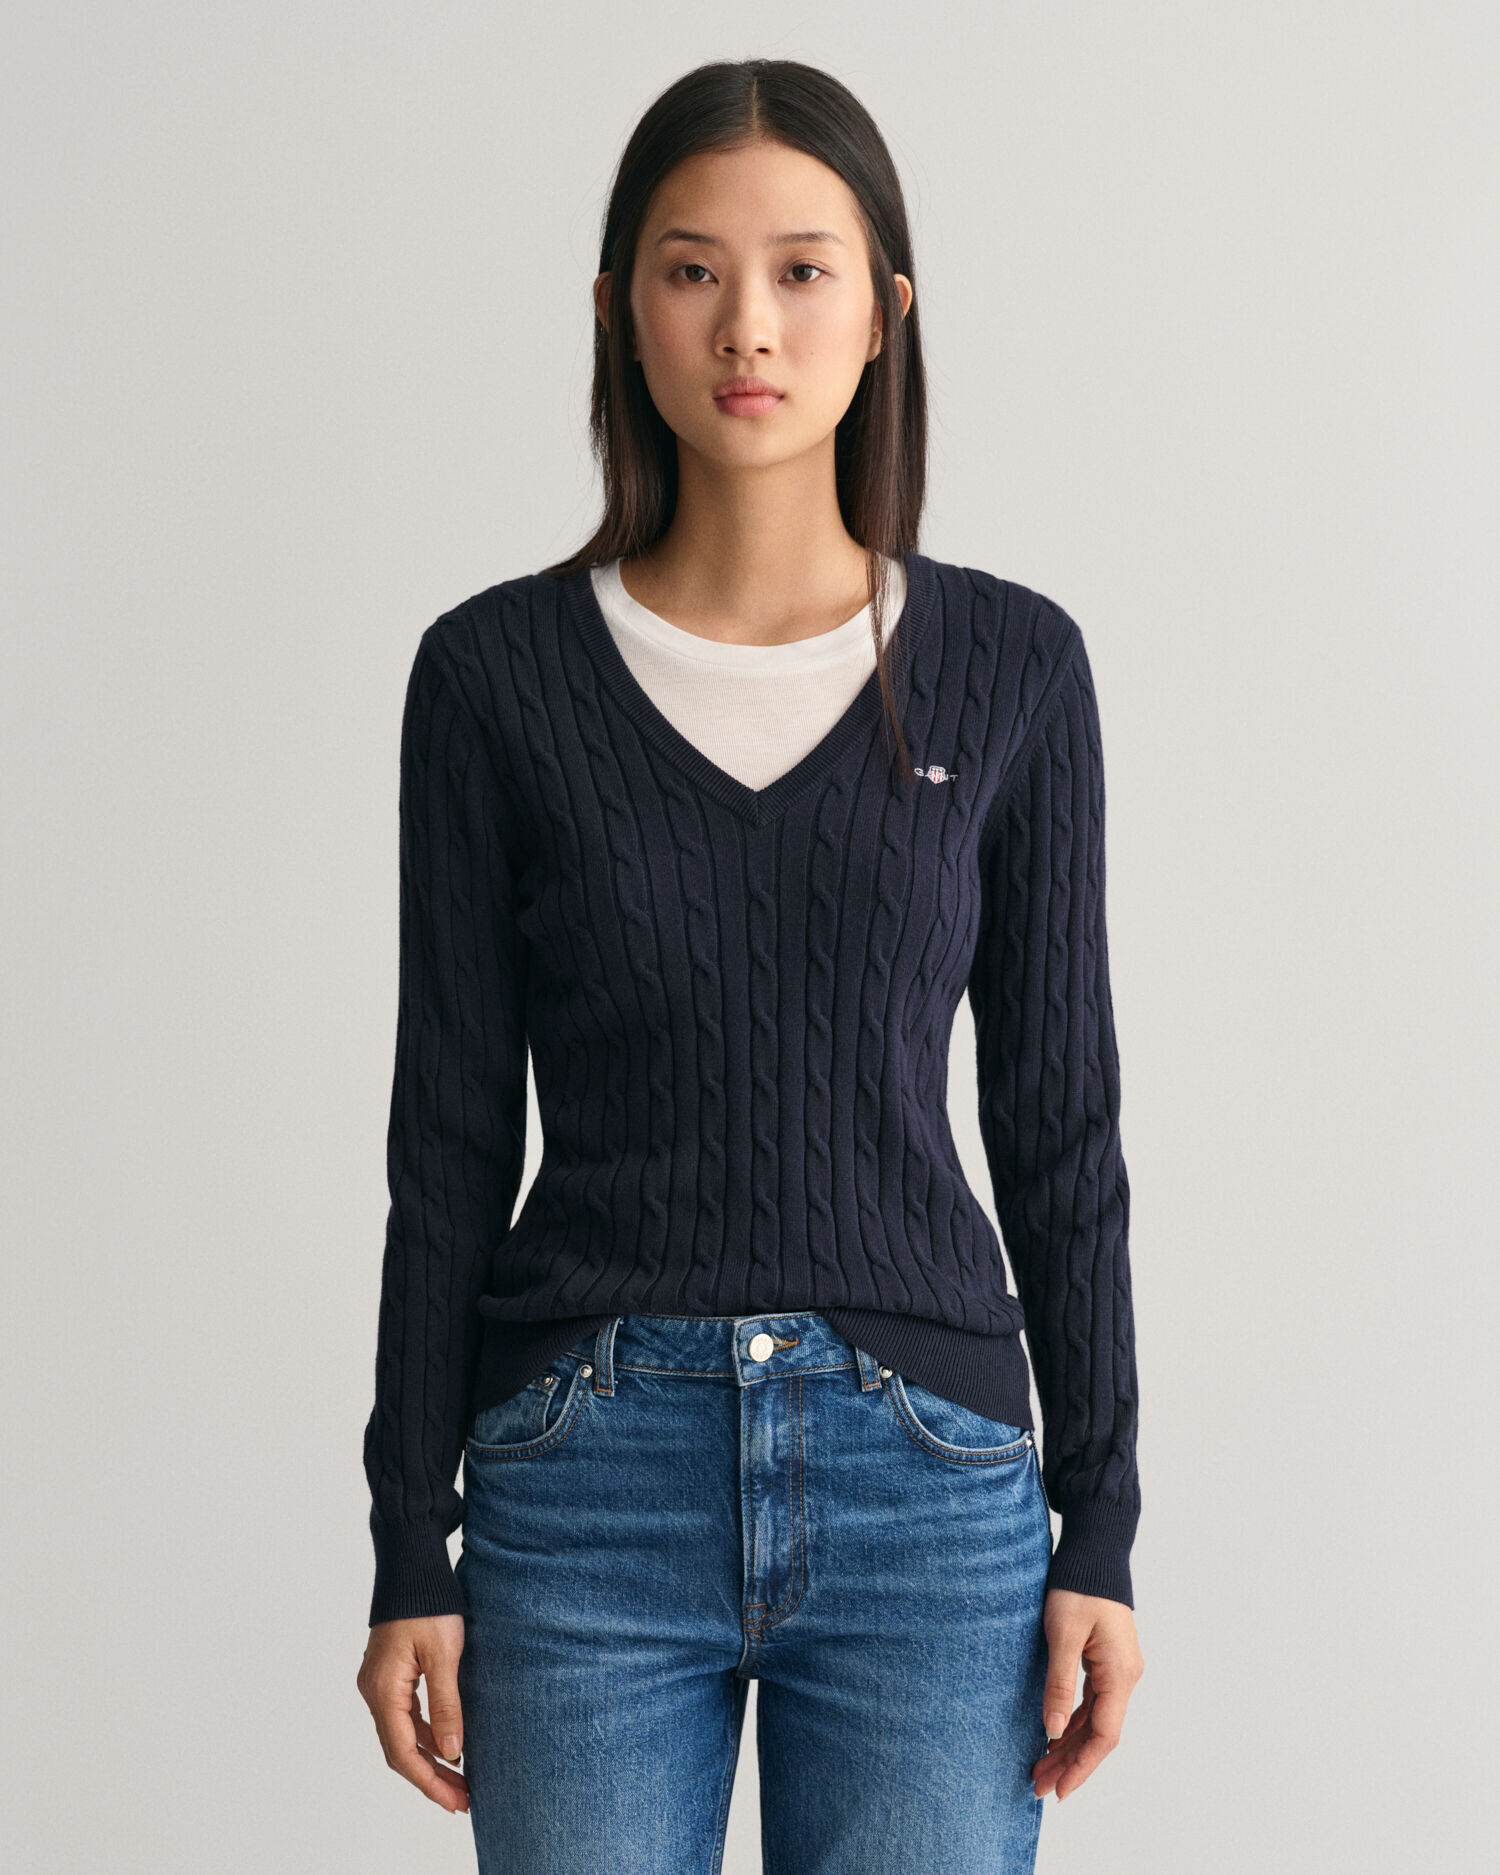 knitted V-neck jumper